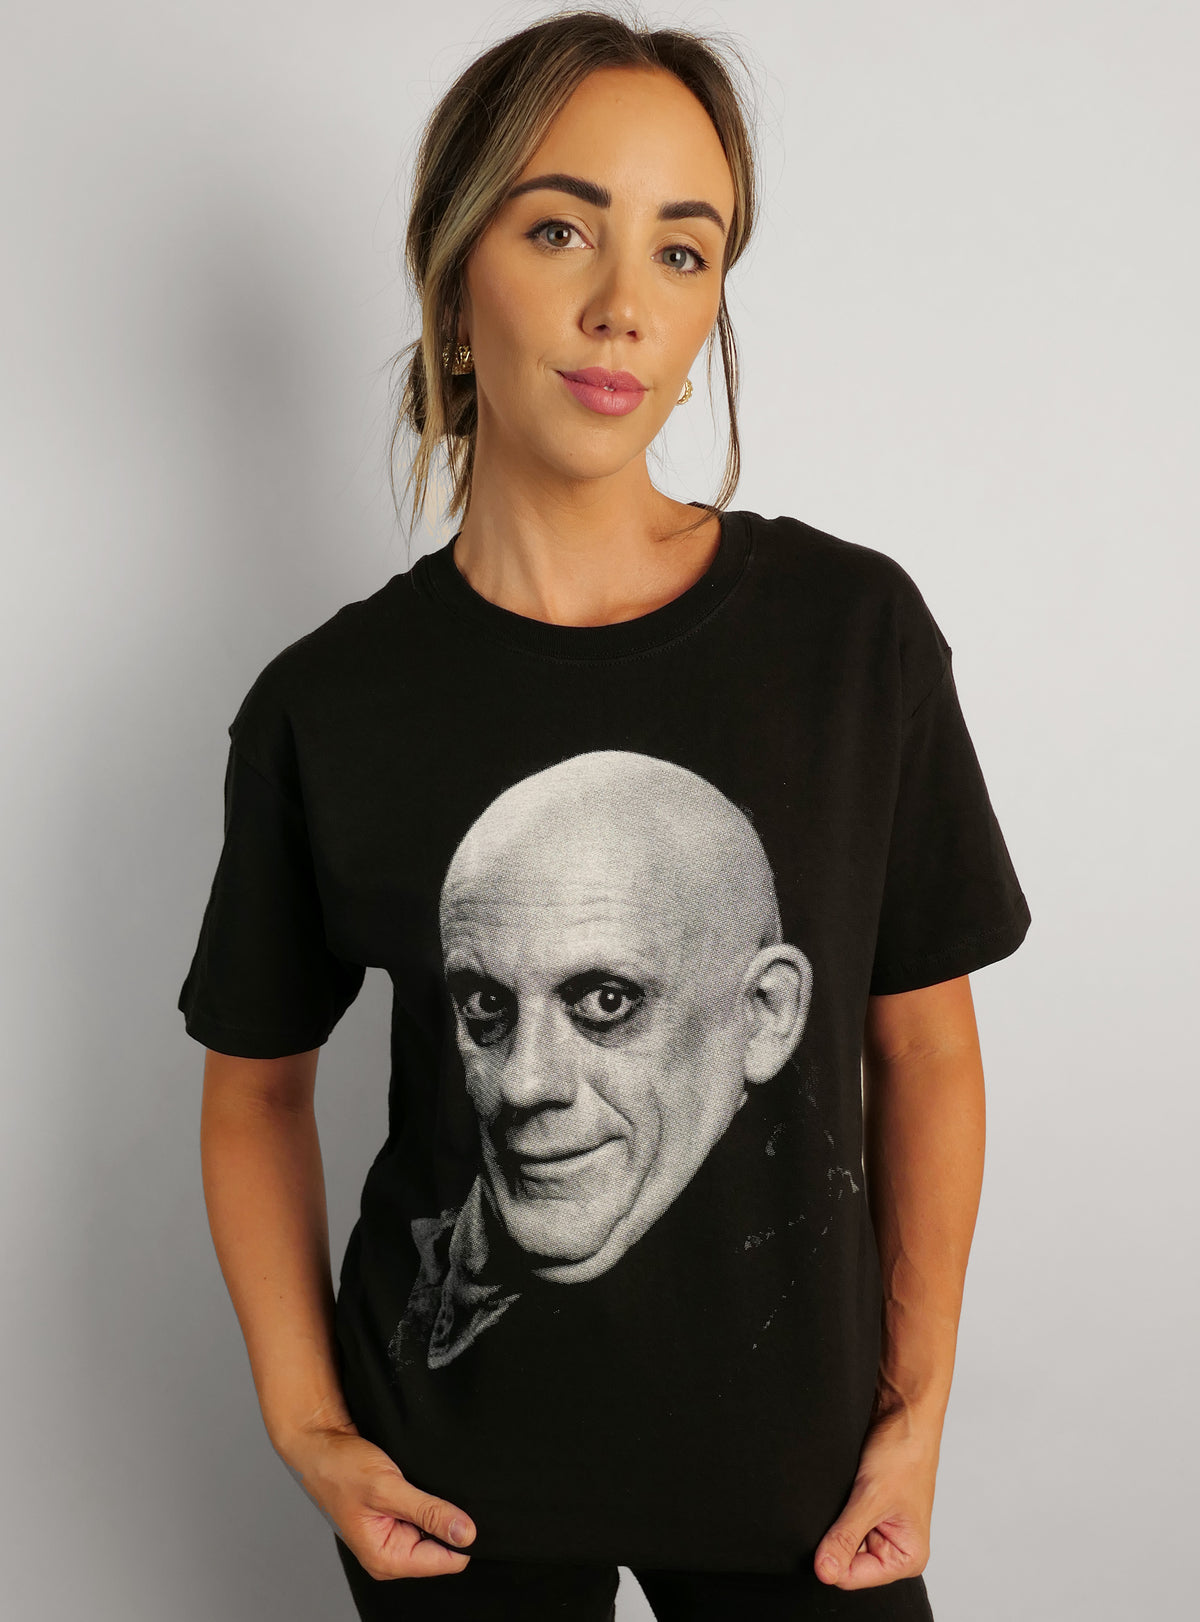 Addams Family Values Matching T-Shirt Set